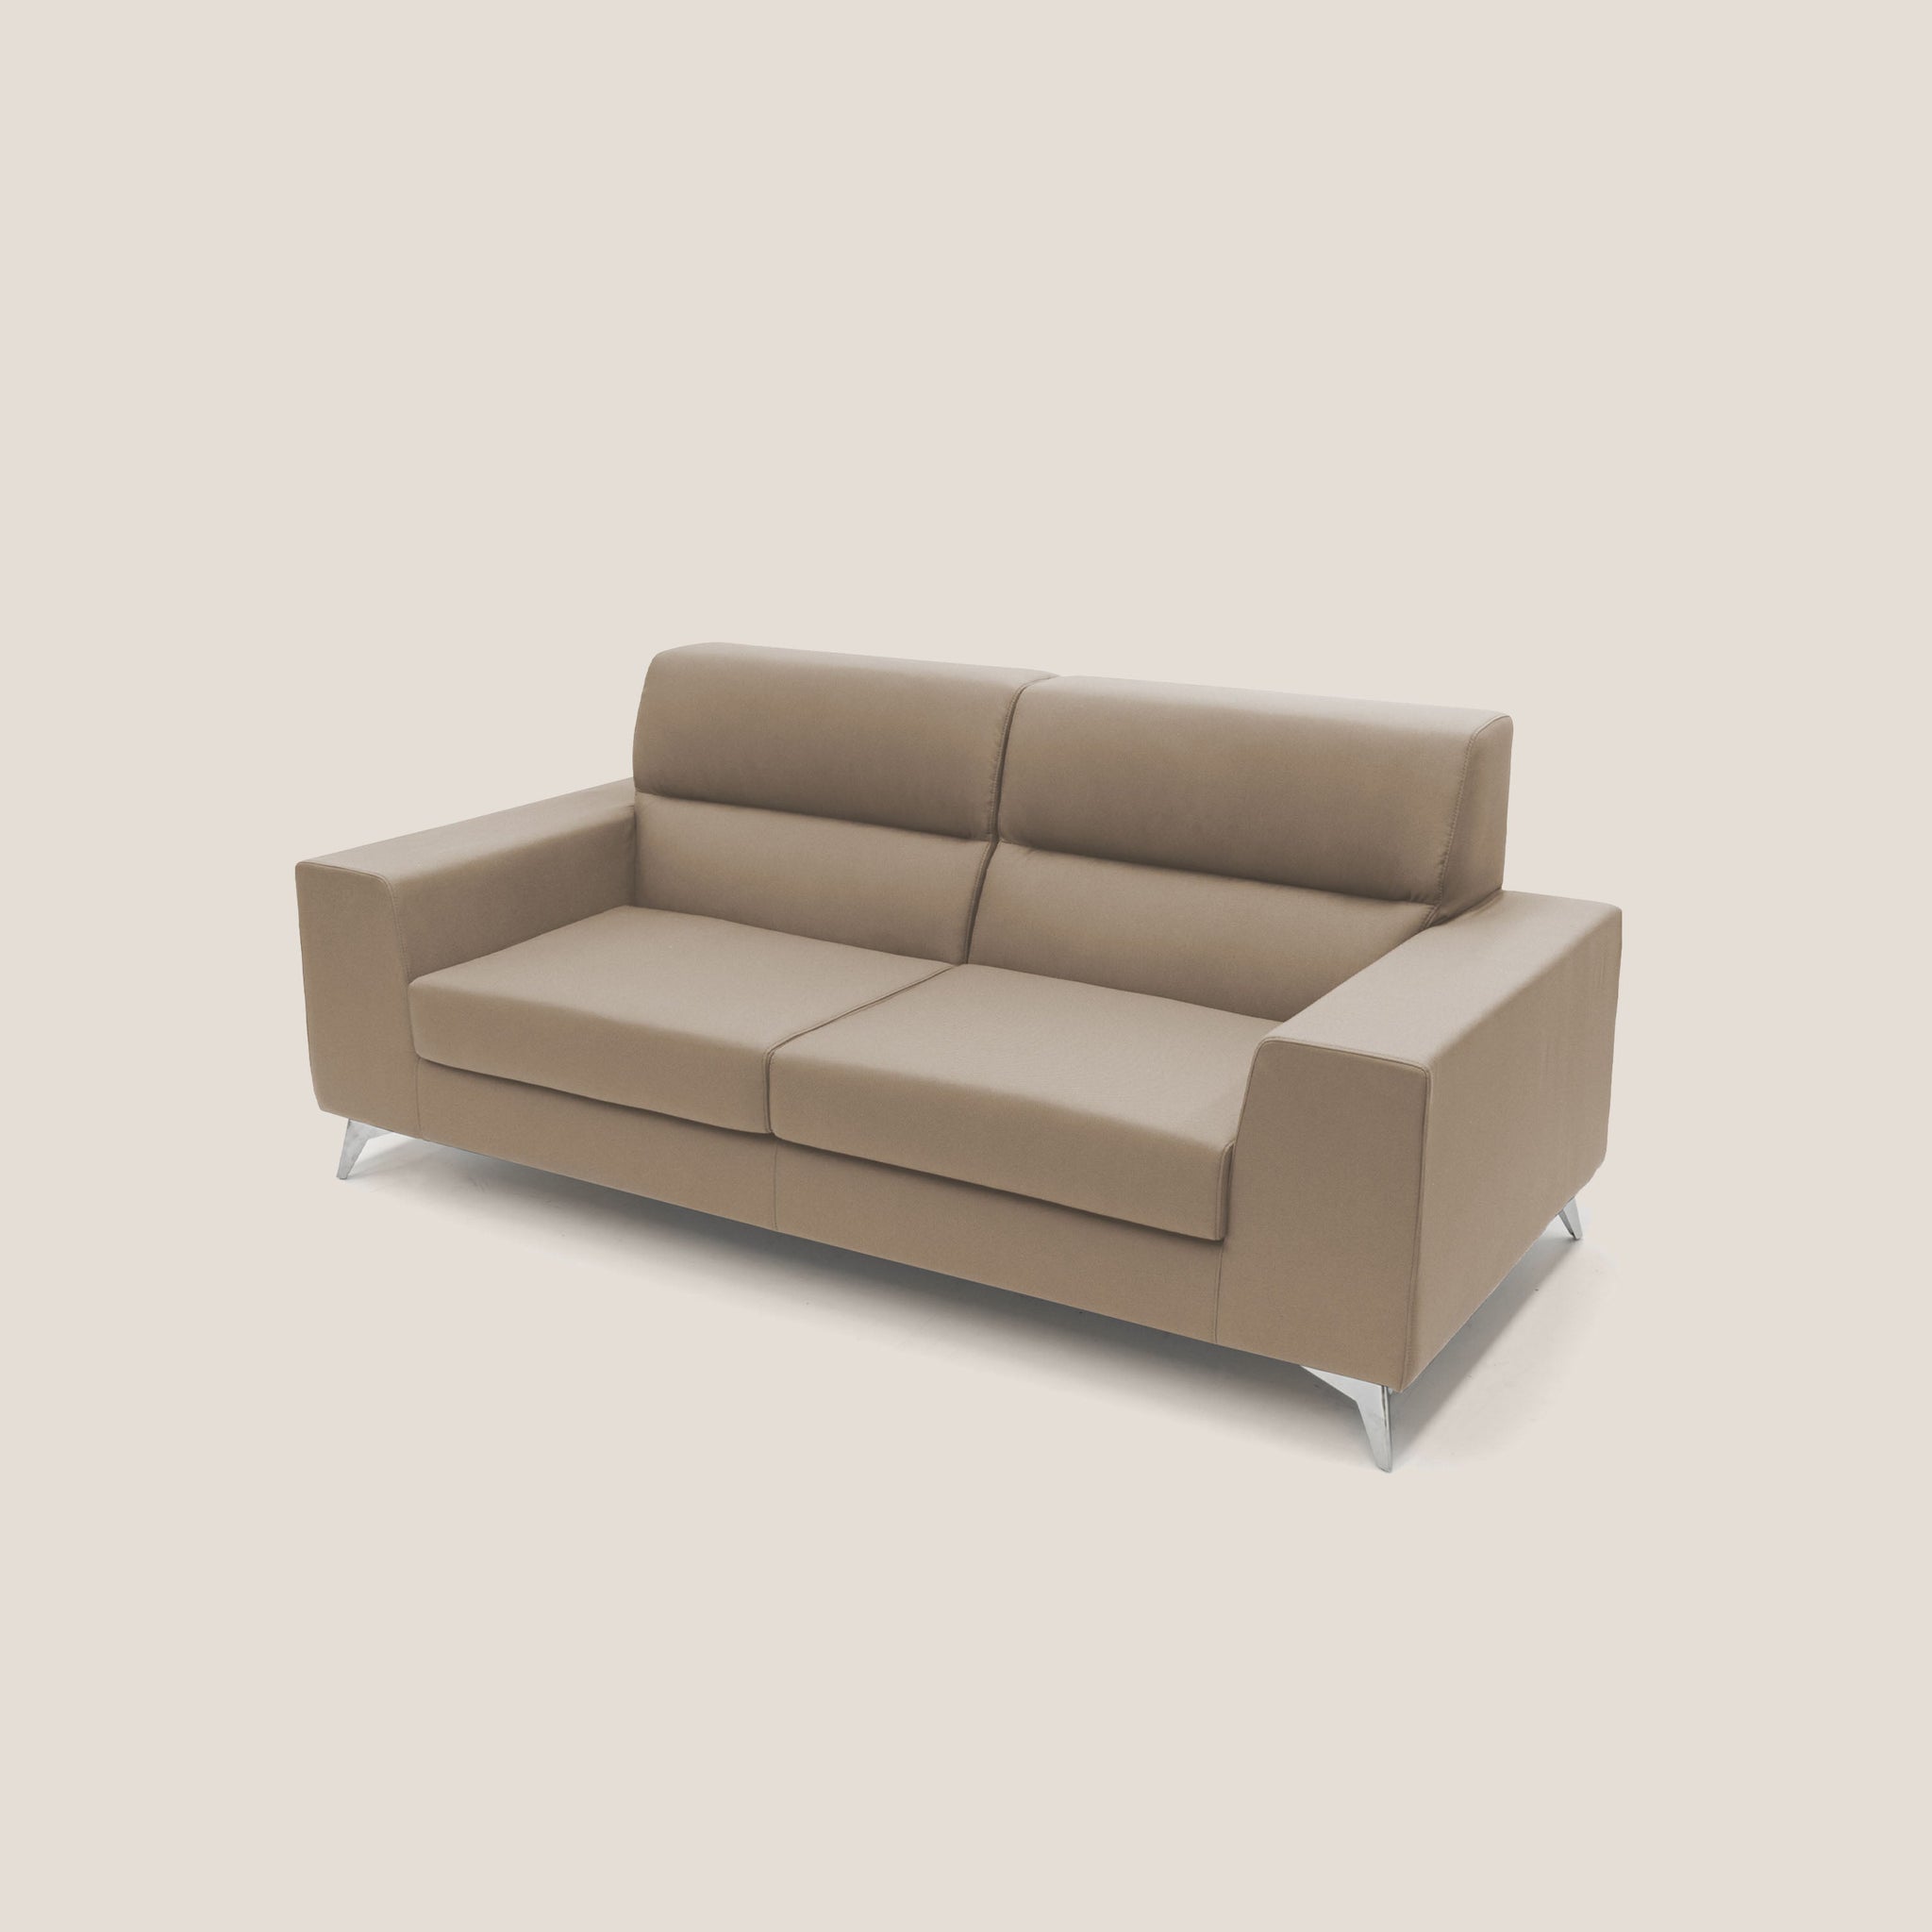 Titan modernes Sofa aus wasserfestem Stoff